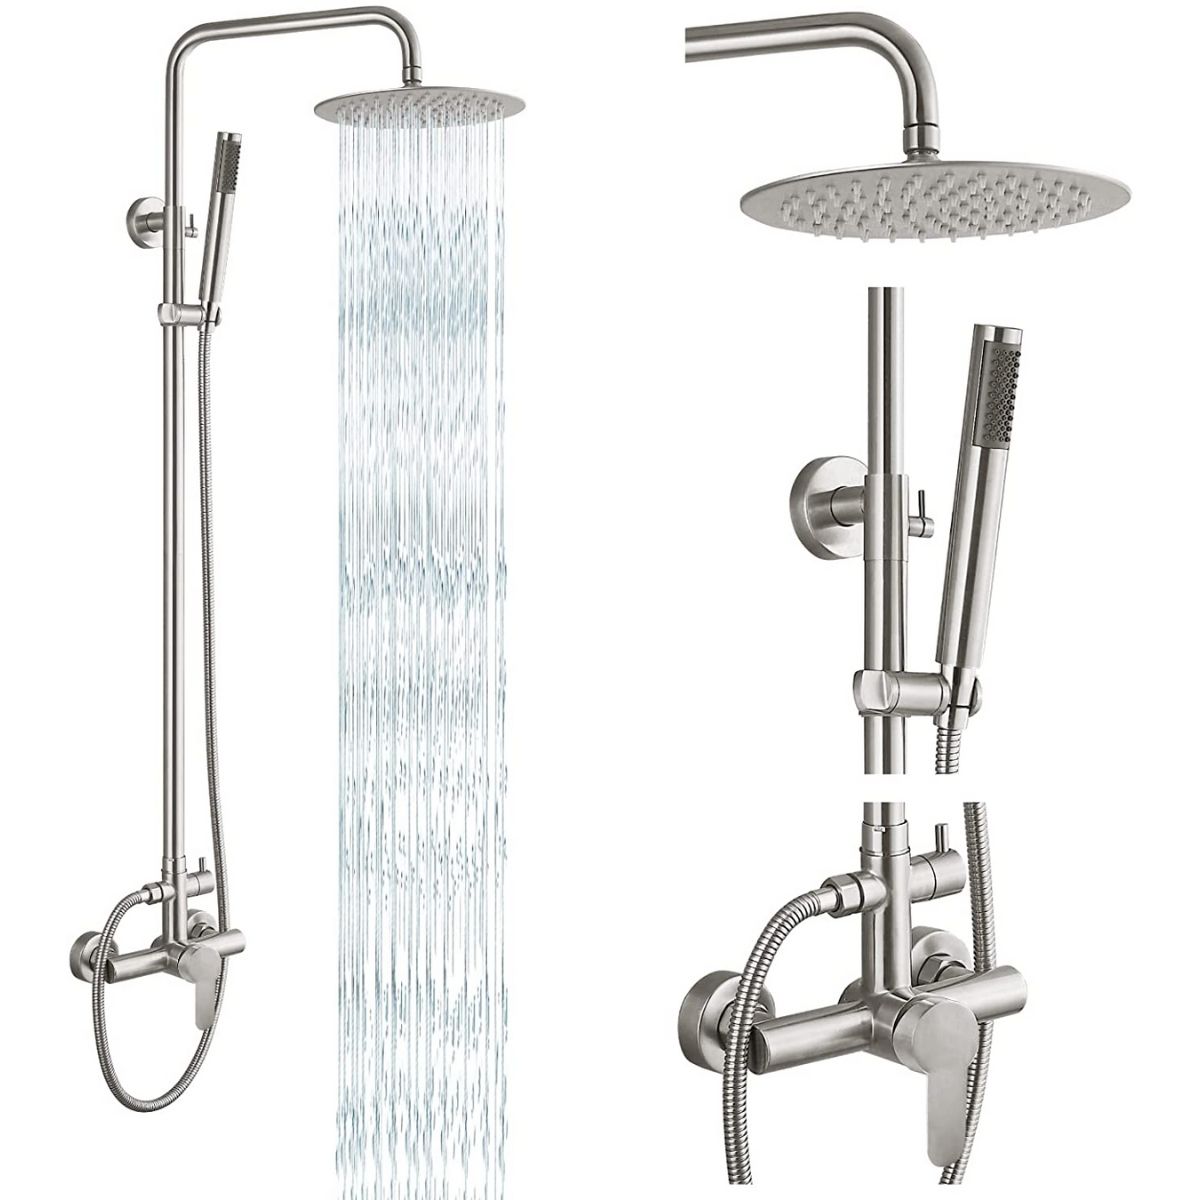 Gontonovo Outdoor Shower Faucet Combo Set 